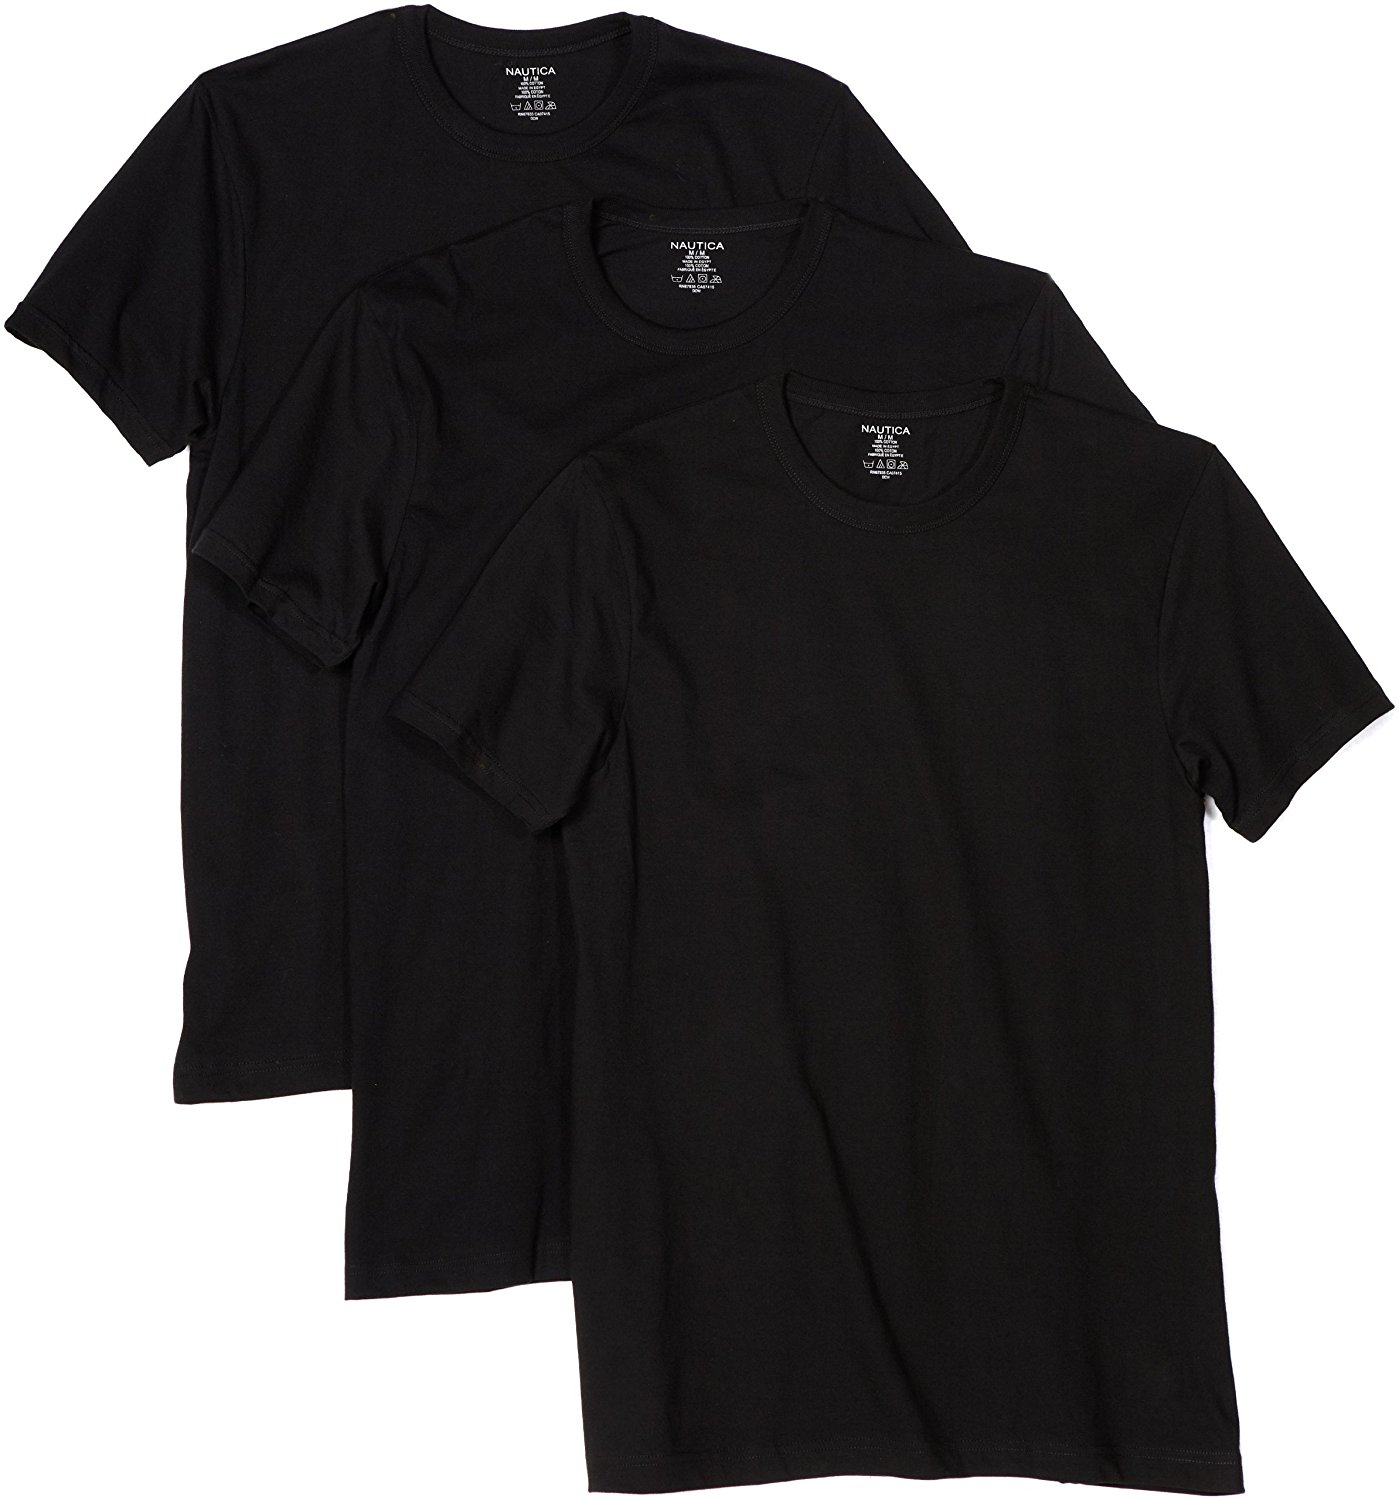 Amazon.com: Nautica Men's Nautica 3 Pack Crew Neck T-Shirt: Clothing